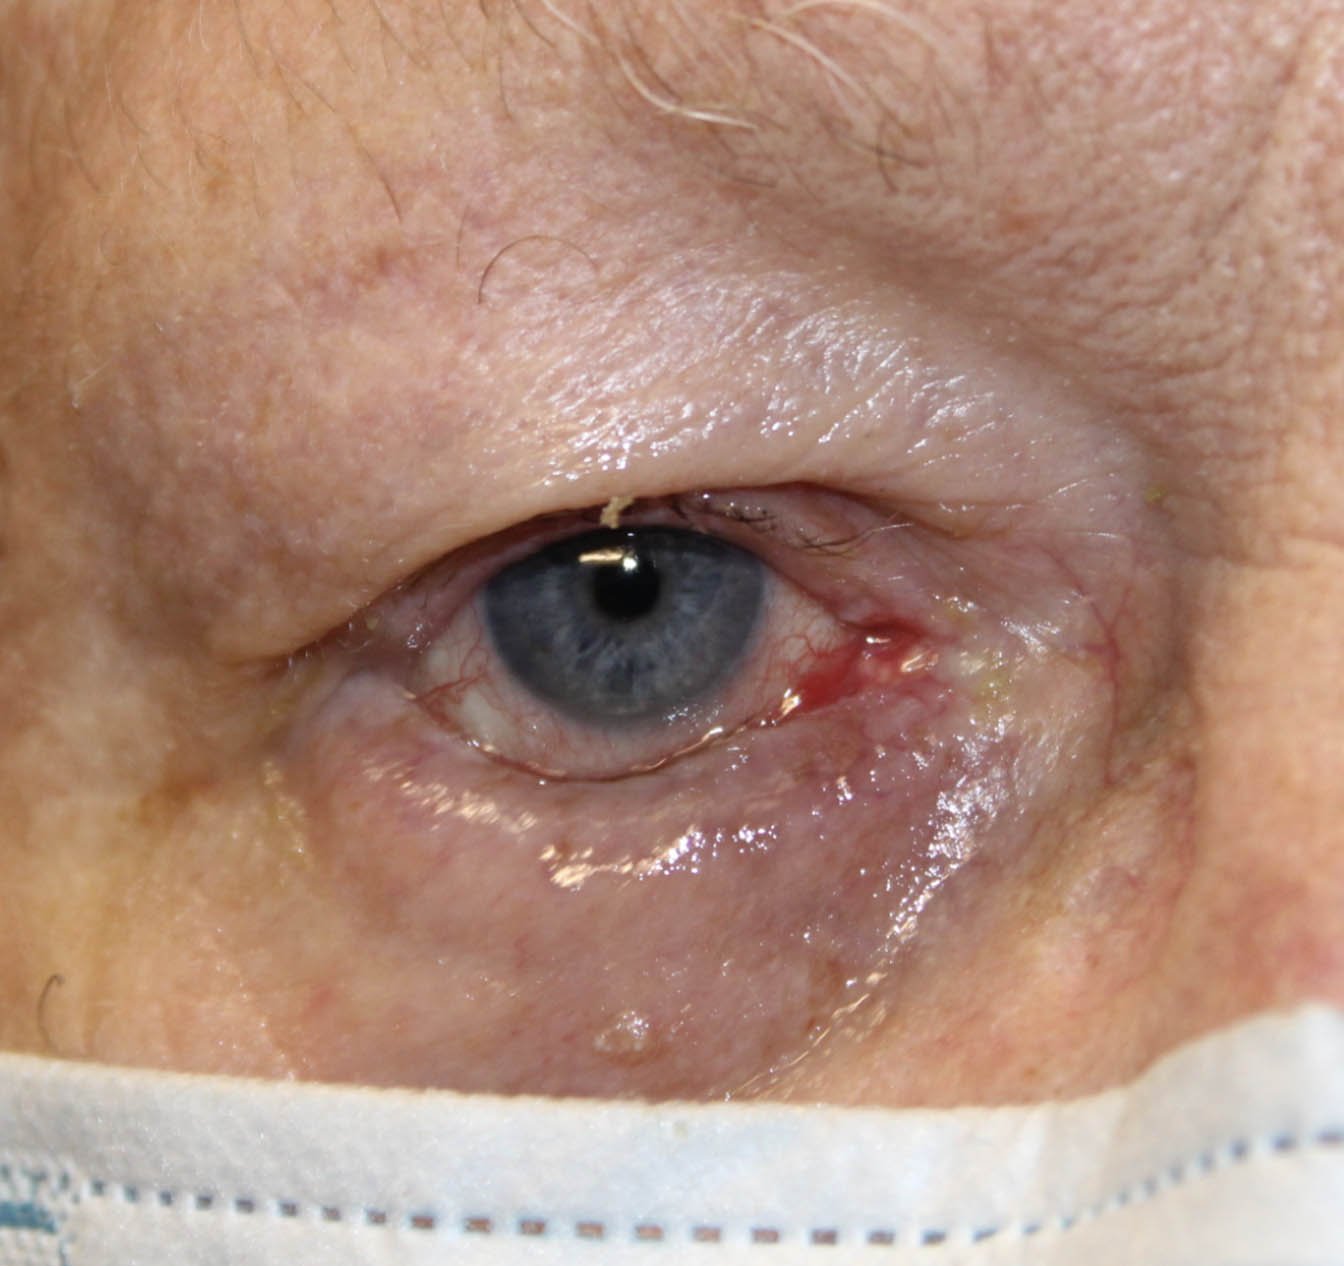 75 year old man after receiving entropion eye repair surgery